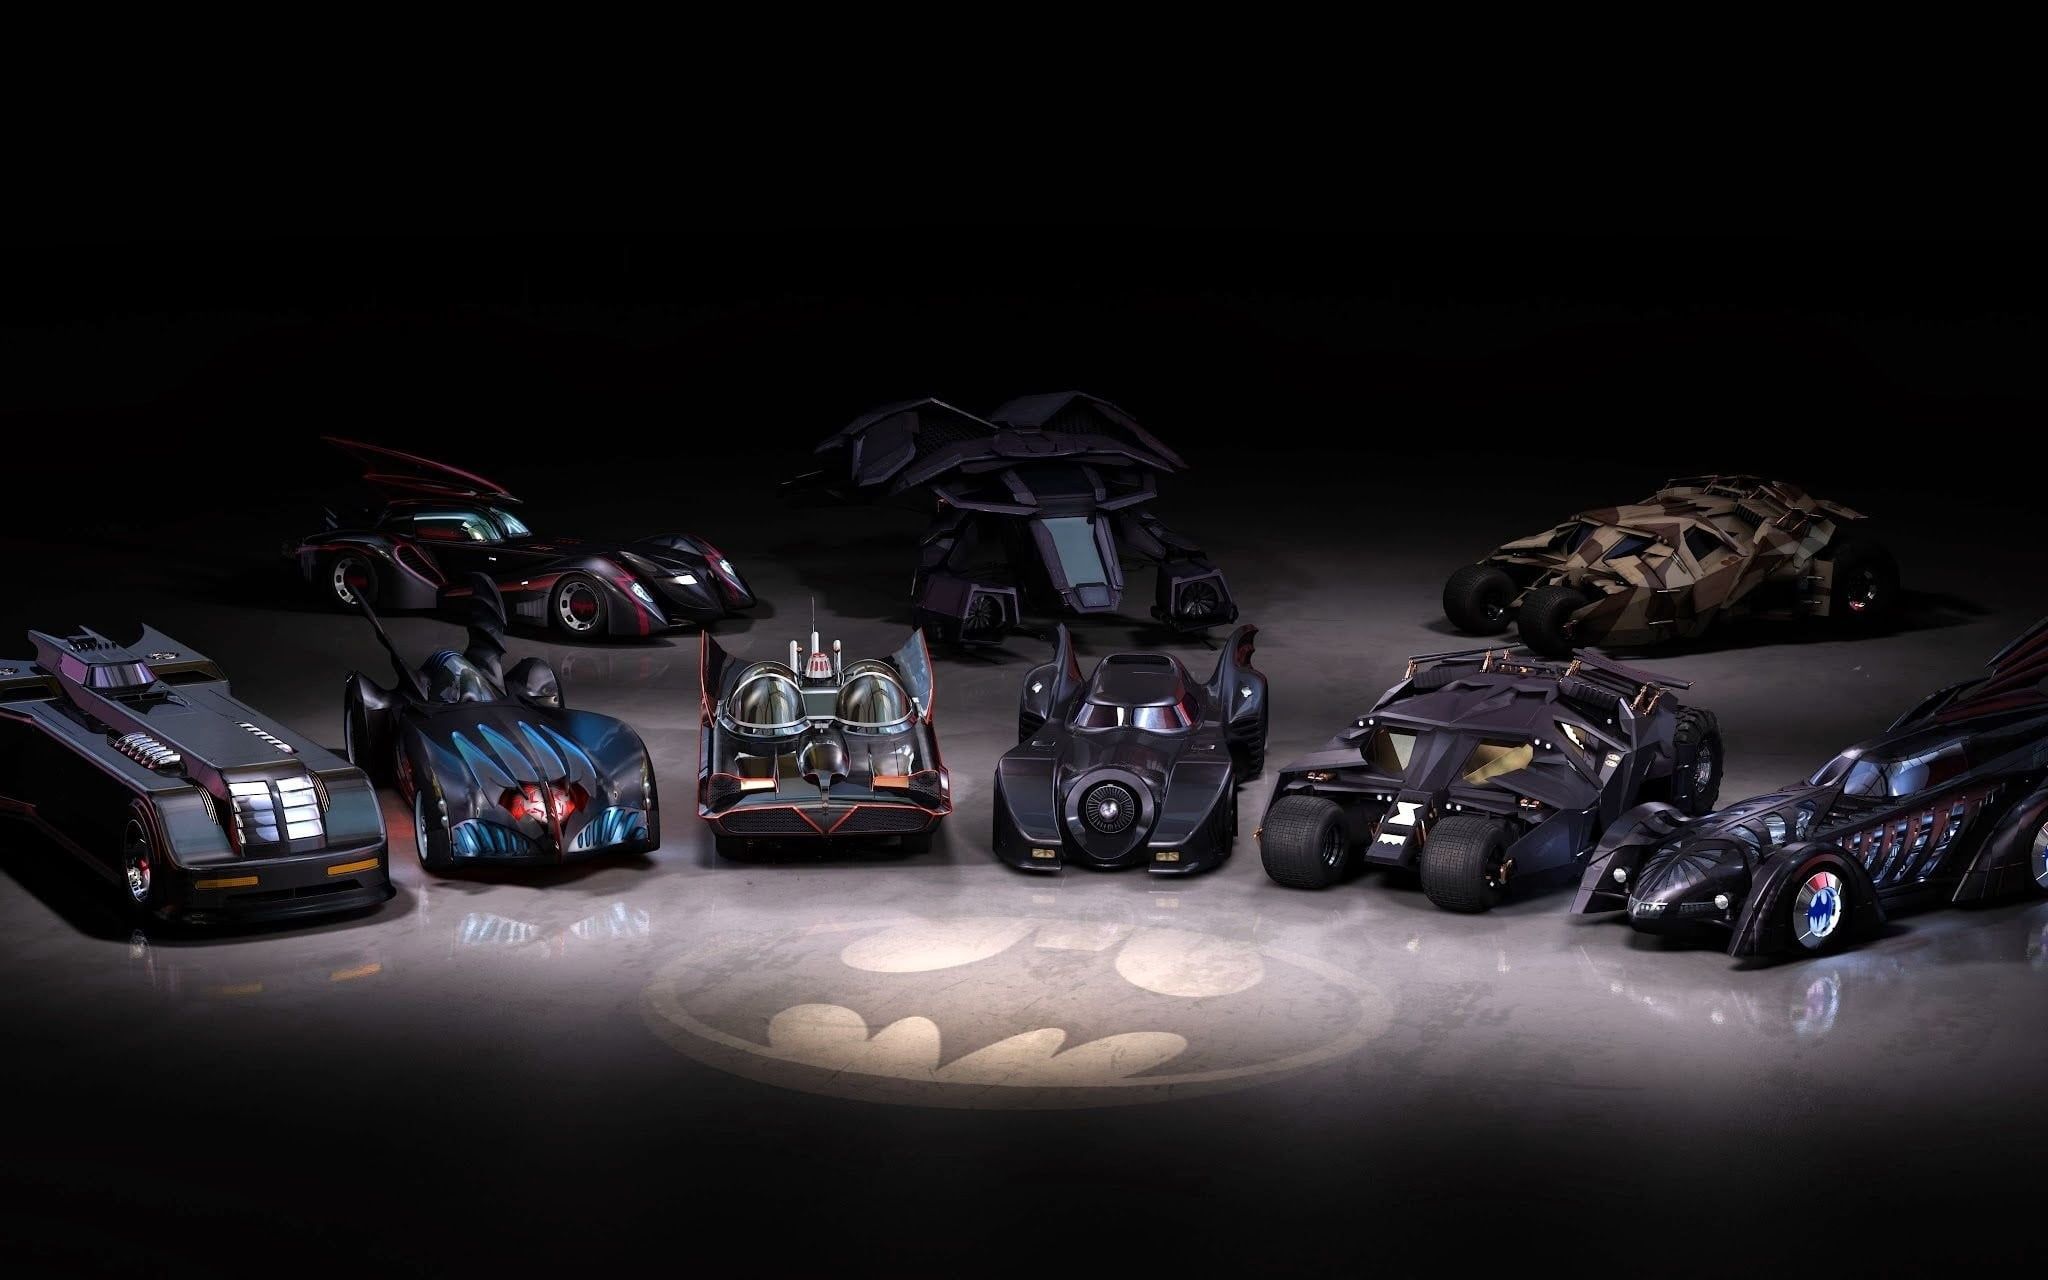 Batman cars collection #Batman #Batmobile Batman Begins Bat signal #car #supercars digital art P #wallpaper #hdwallp. Batmobile, Batman car, Batman batmobile